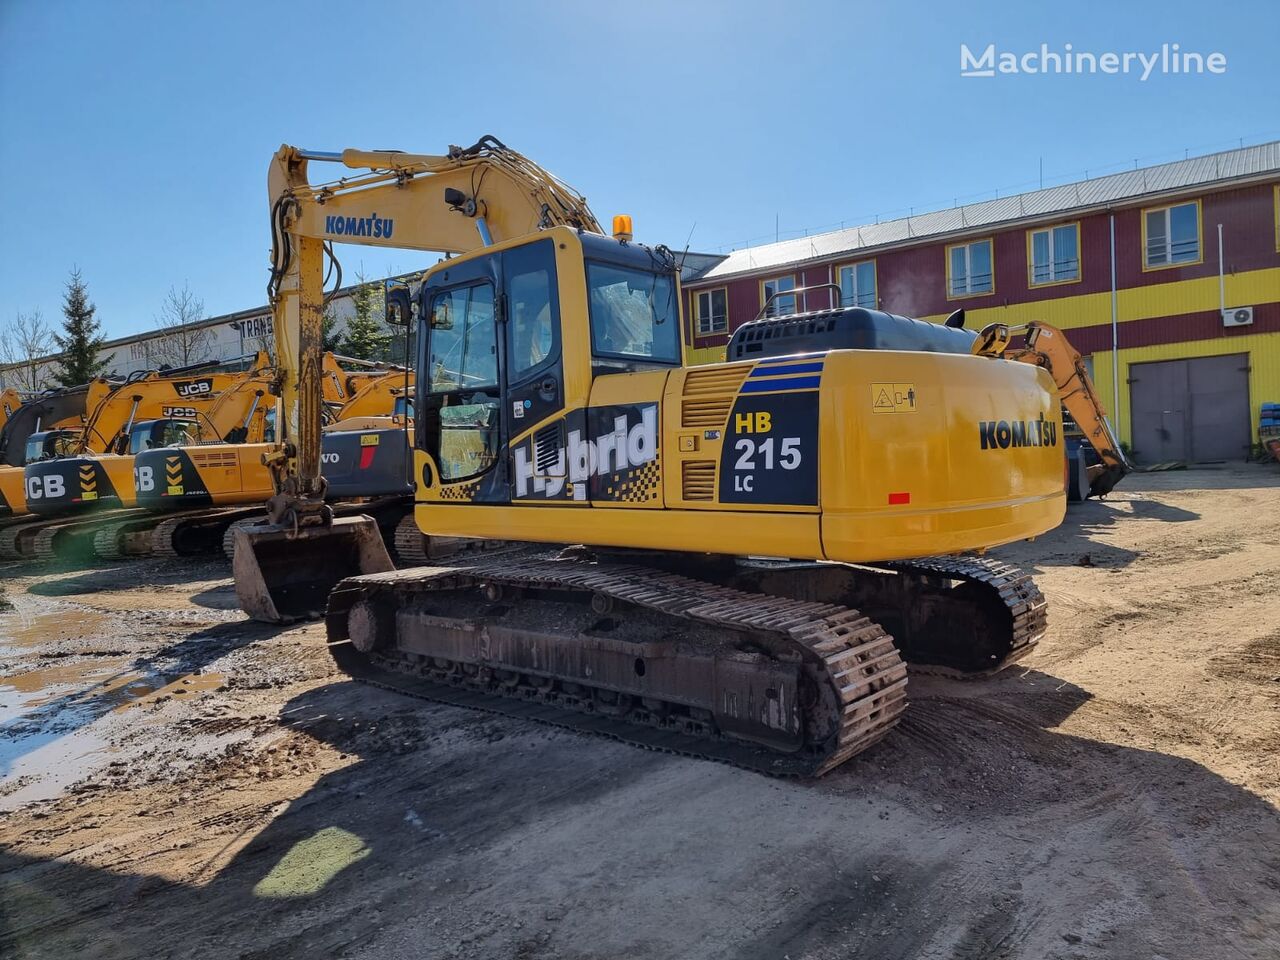 Komatsu HB215 tracked excavator